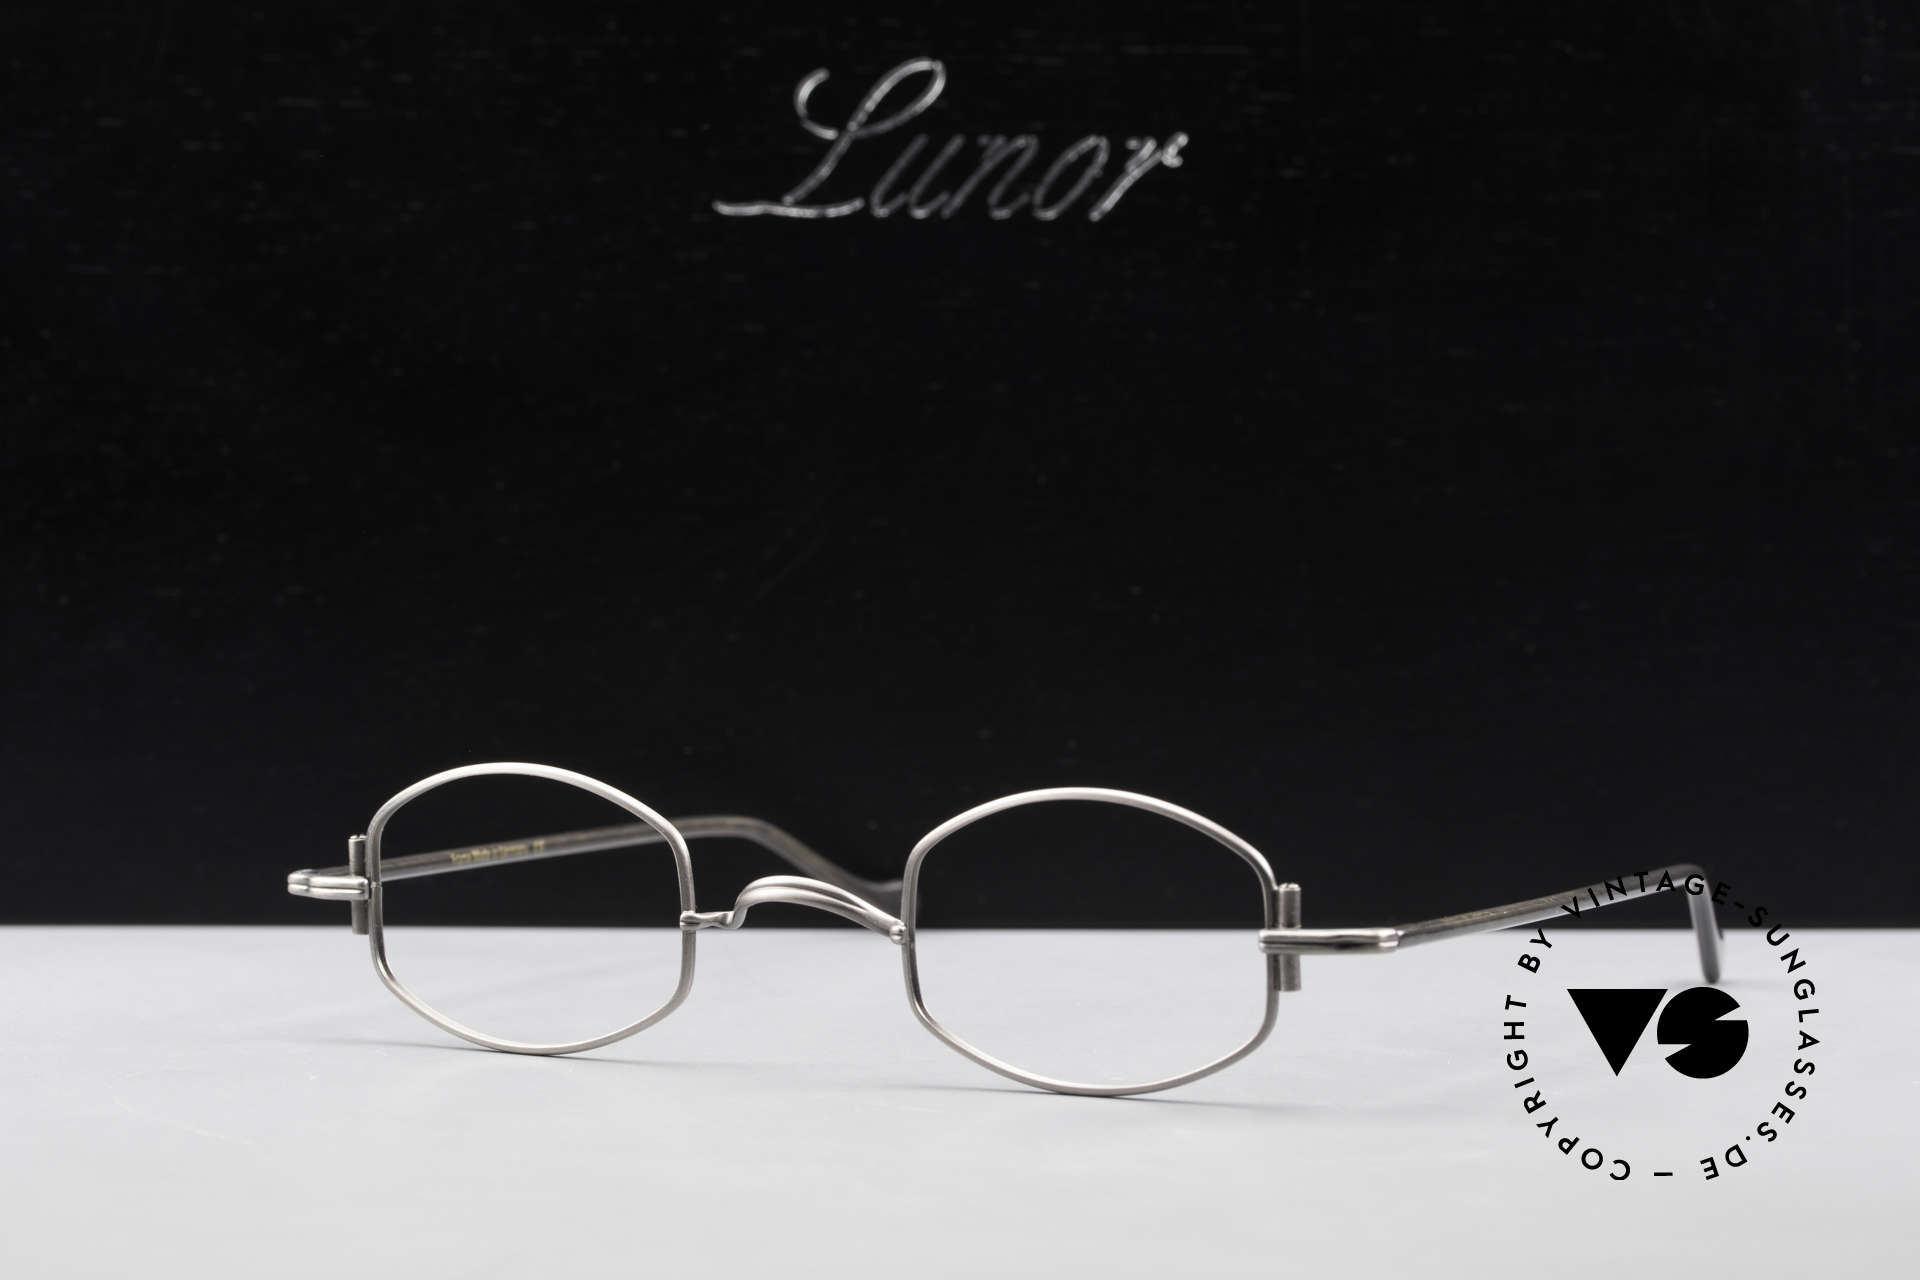 Lunor XA 03 Extraordinary Eyeglass Design, Size: medium, Made for Men and Women